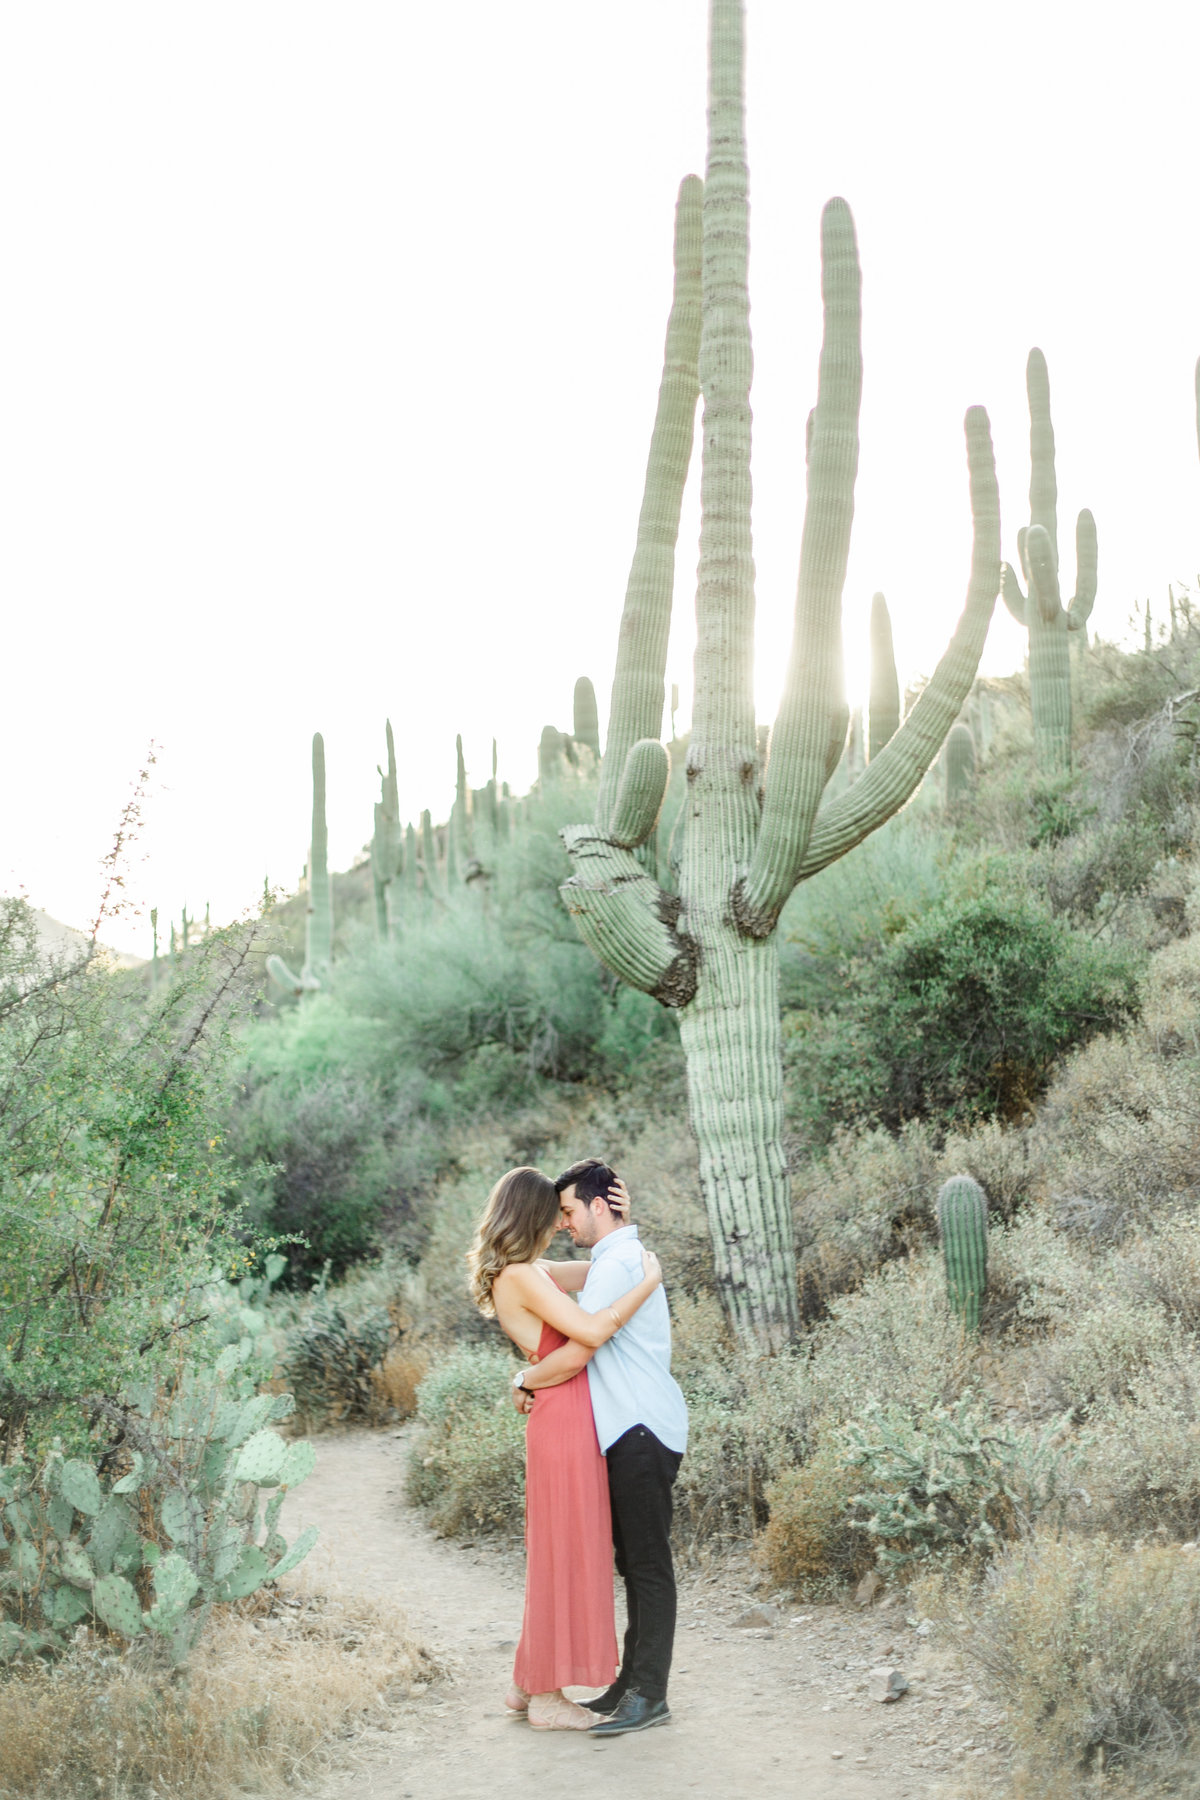 Karlie Colleen Photography - Arizona Desert Engagement - Brynne & Josh -110